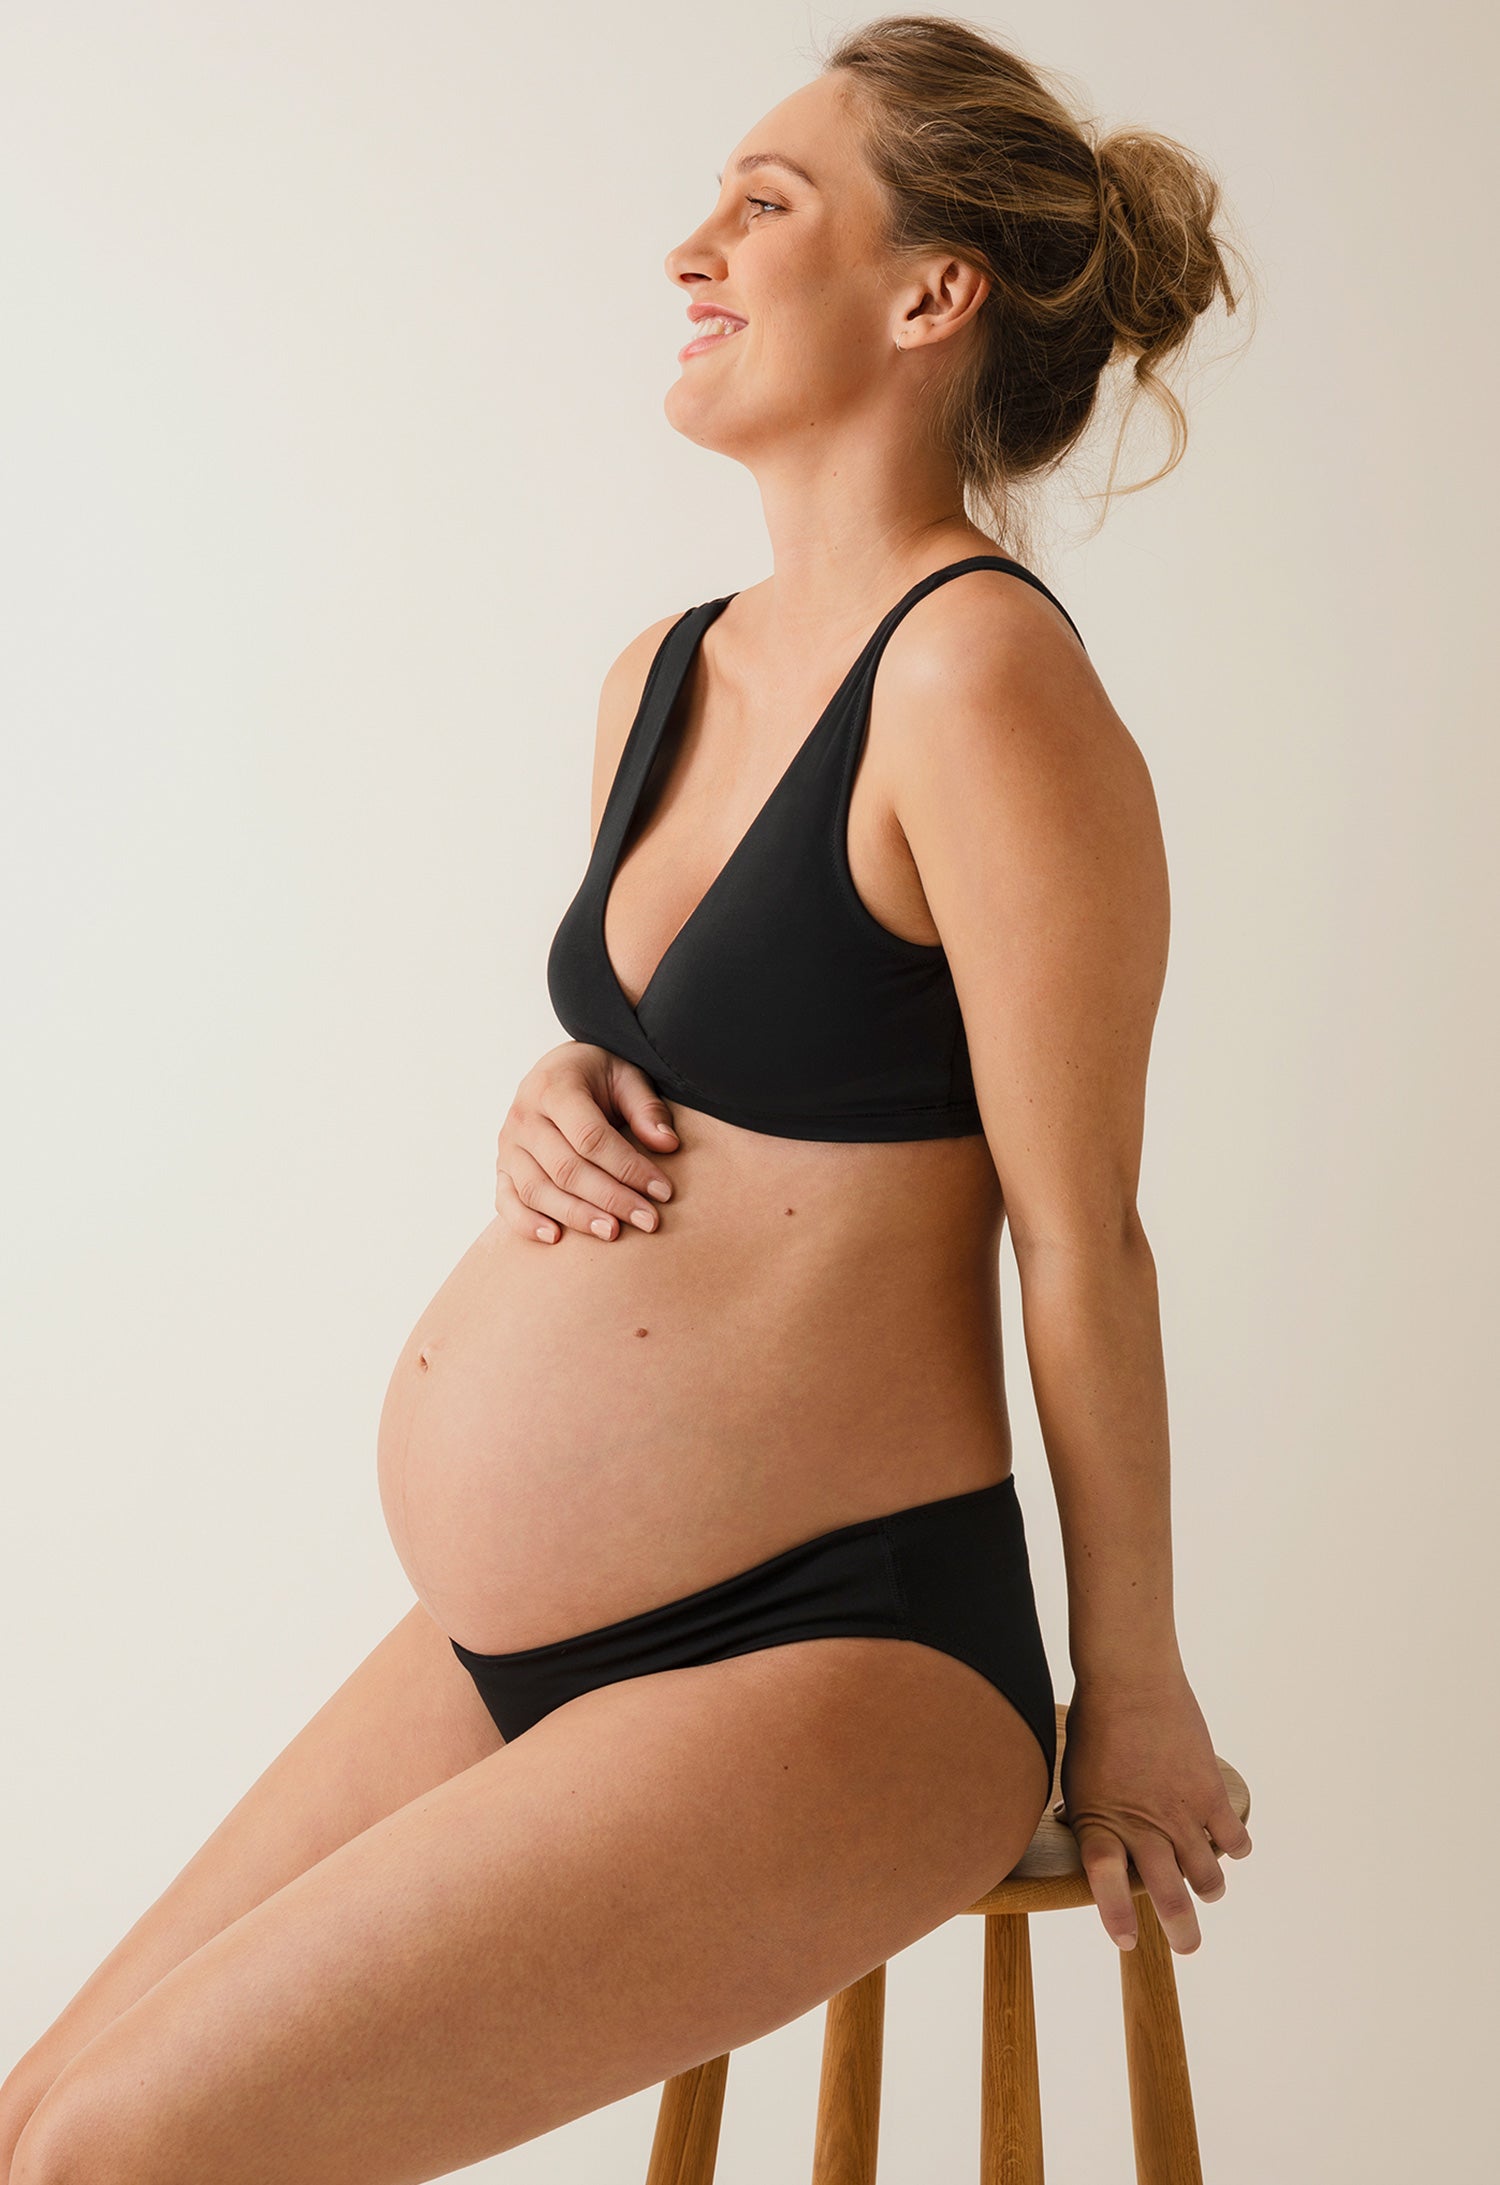 MRMART quality maternity panties pregnant women low waist